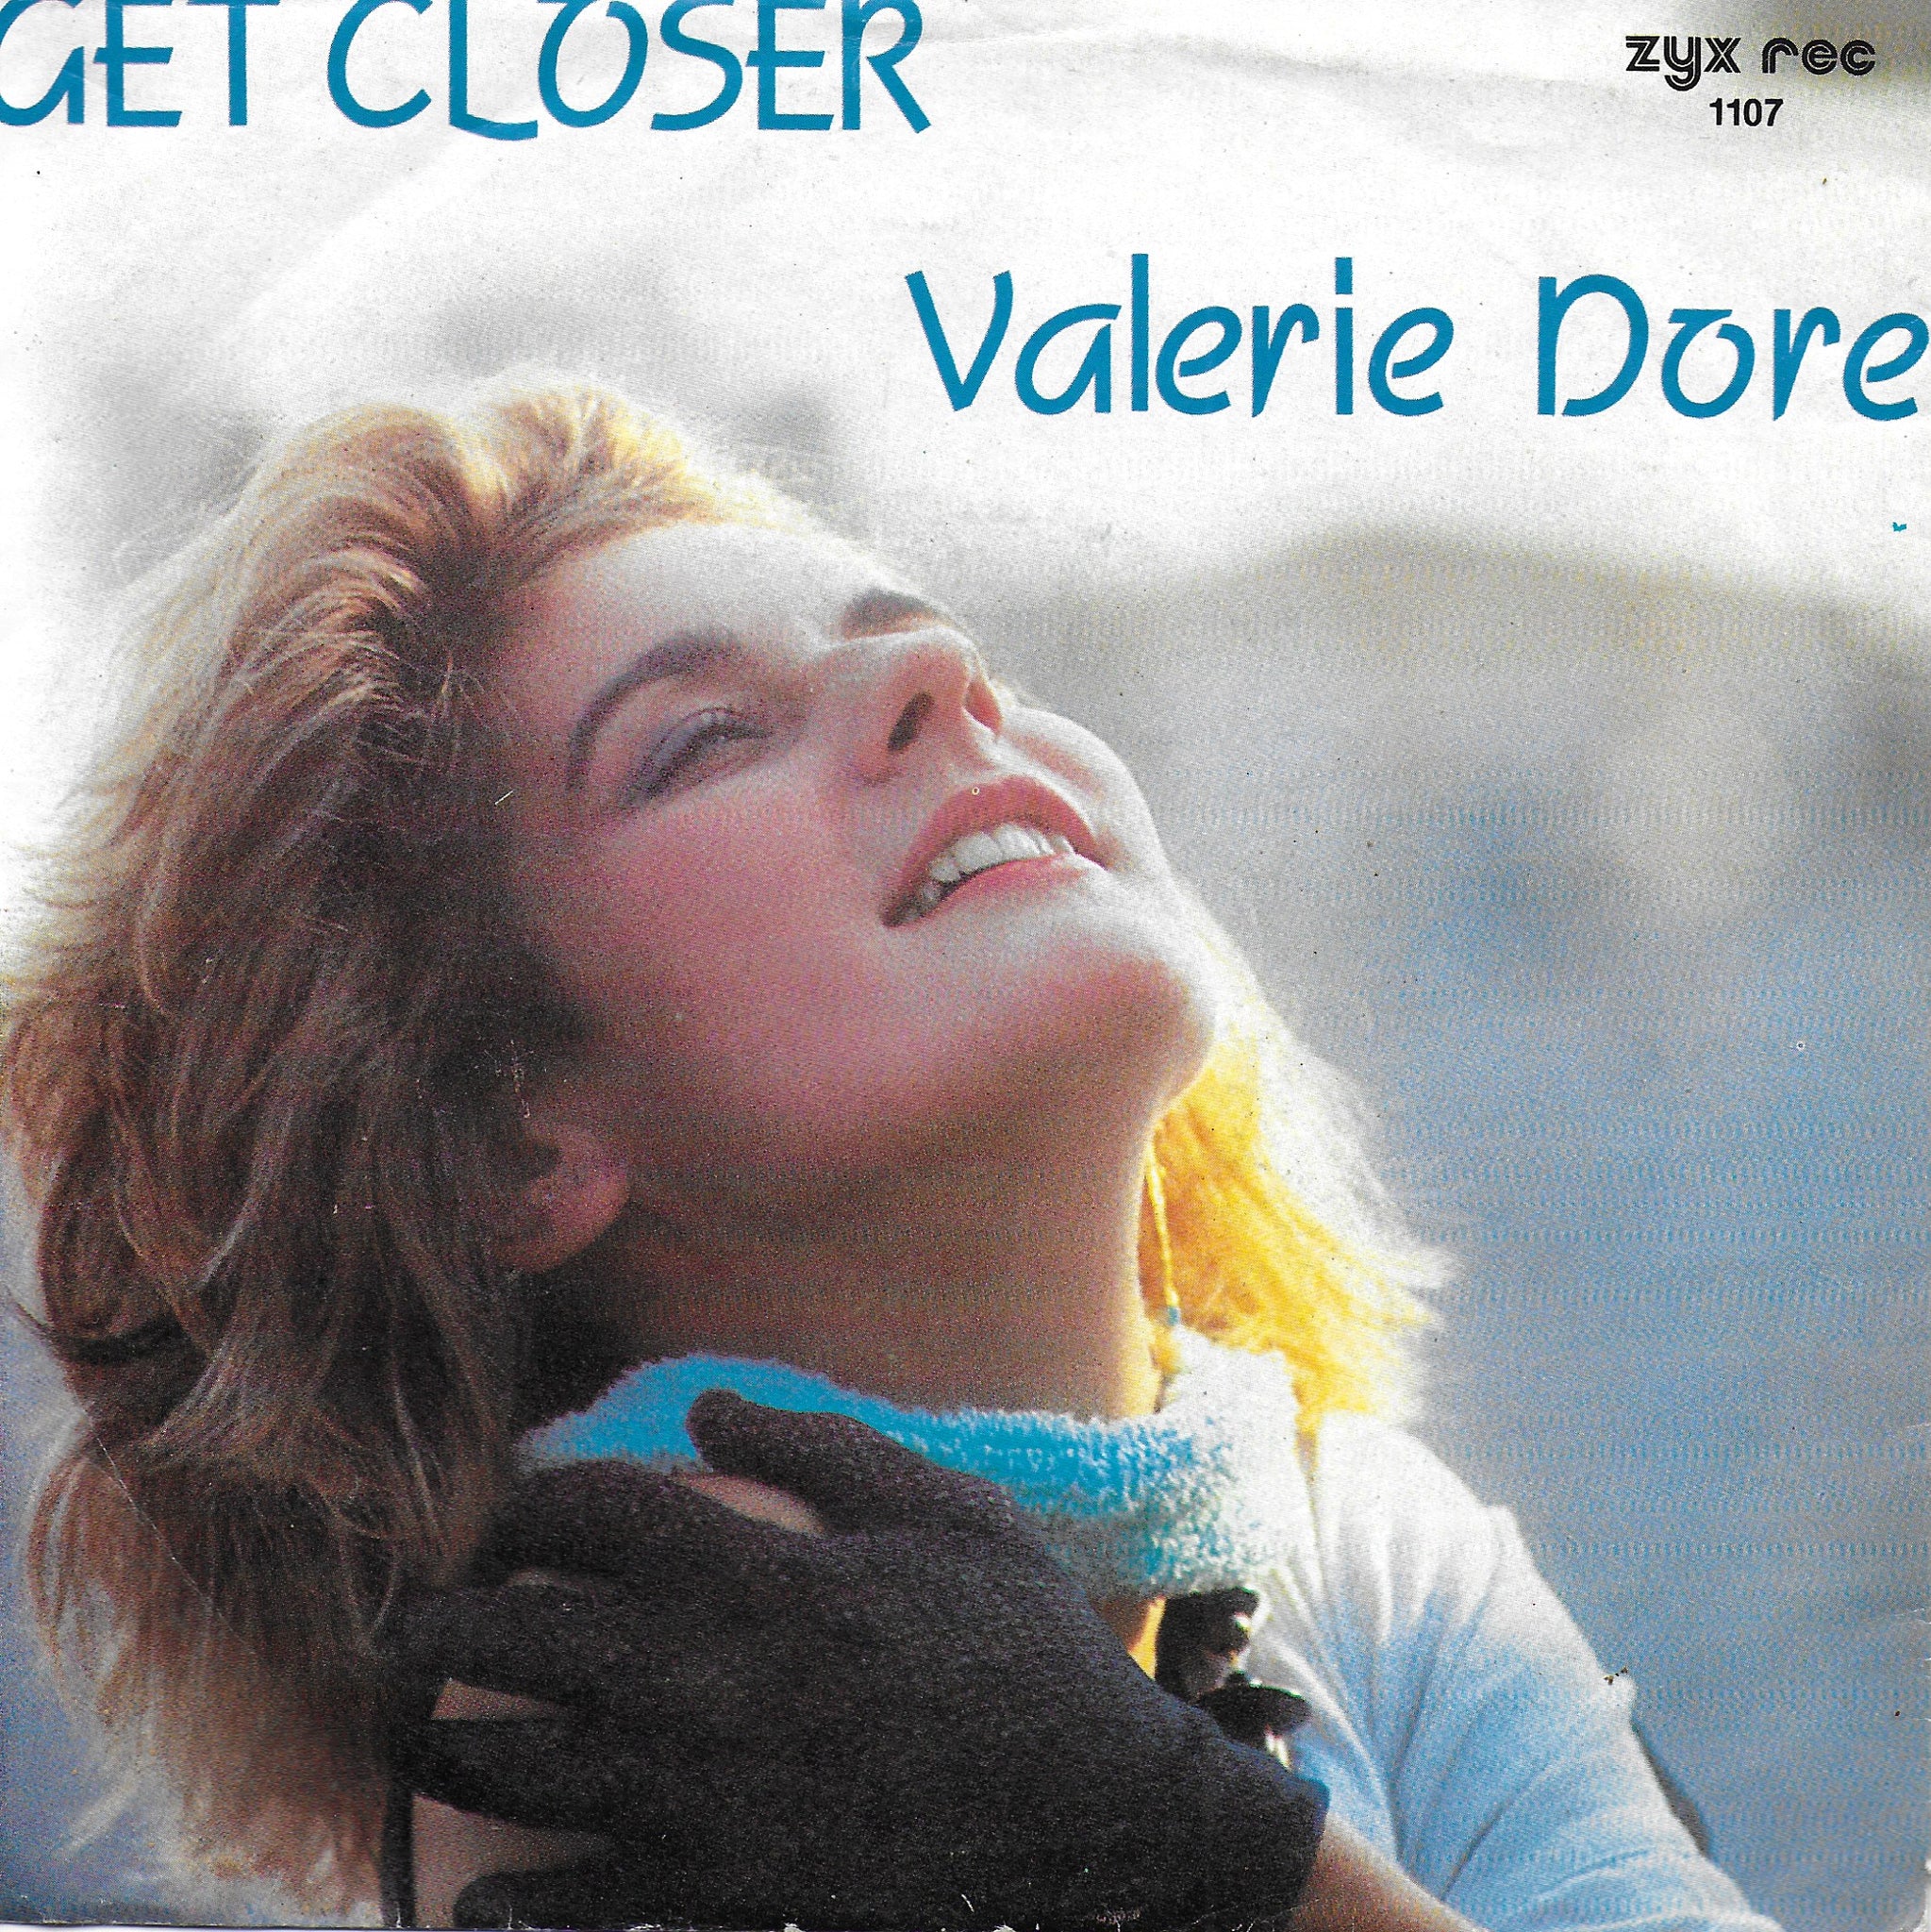 Valerie Dore - Get closer (Duitse uitgave)